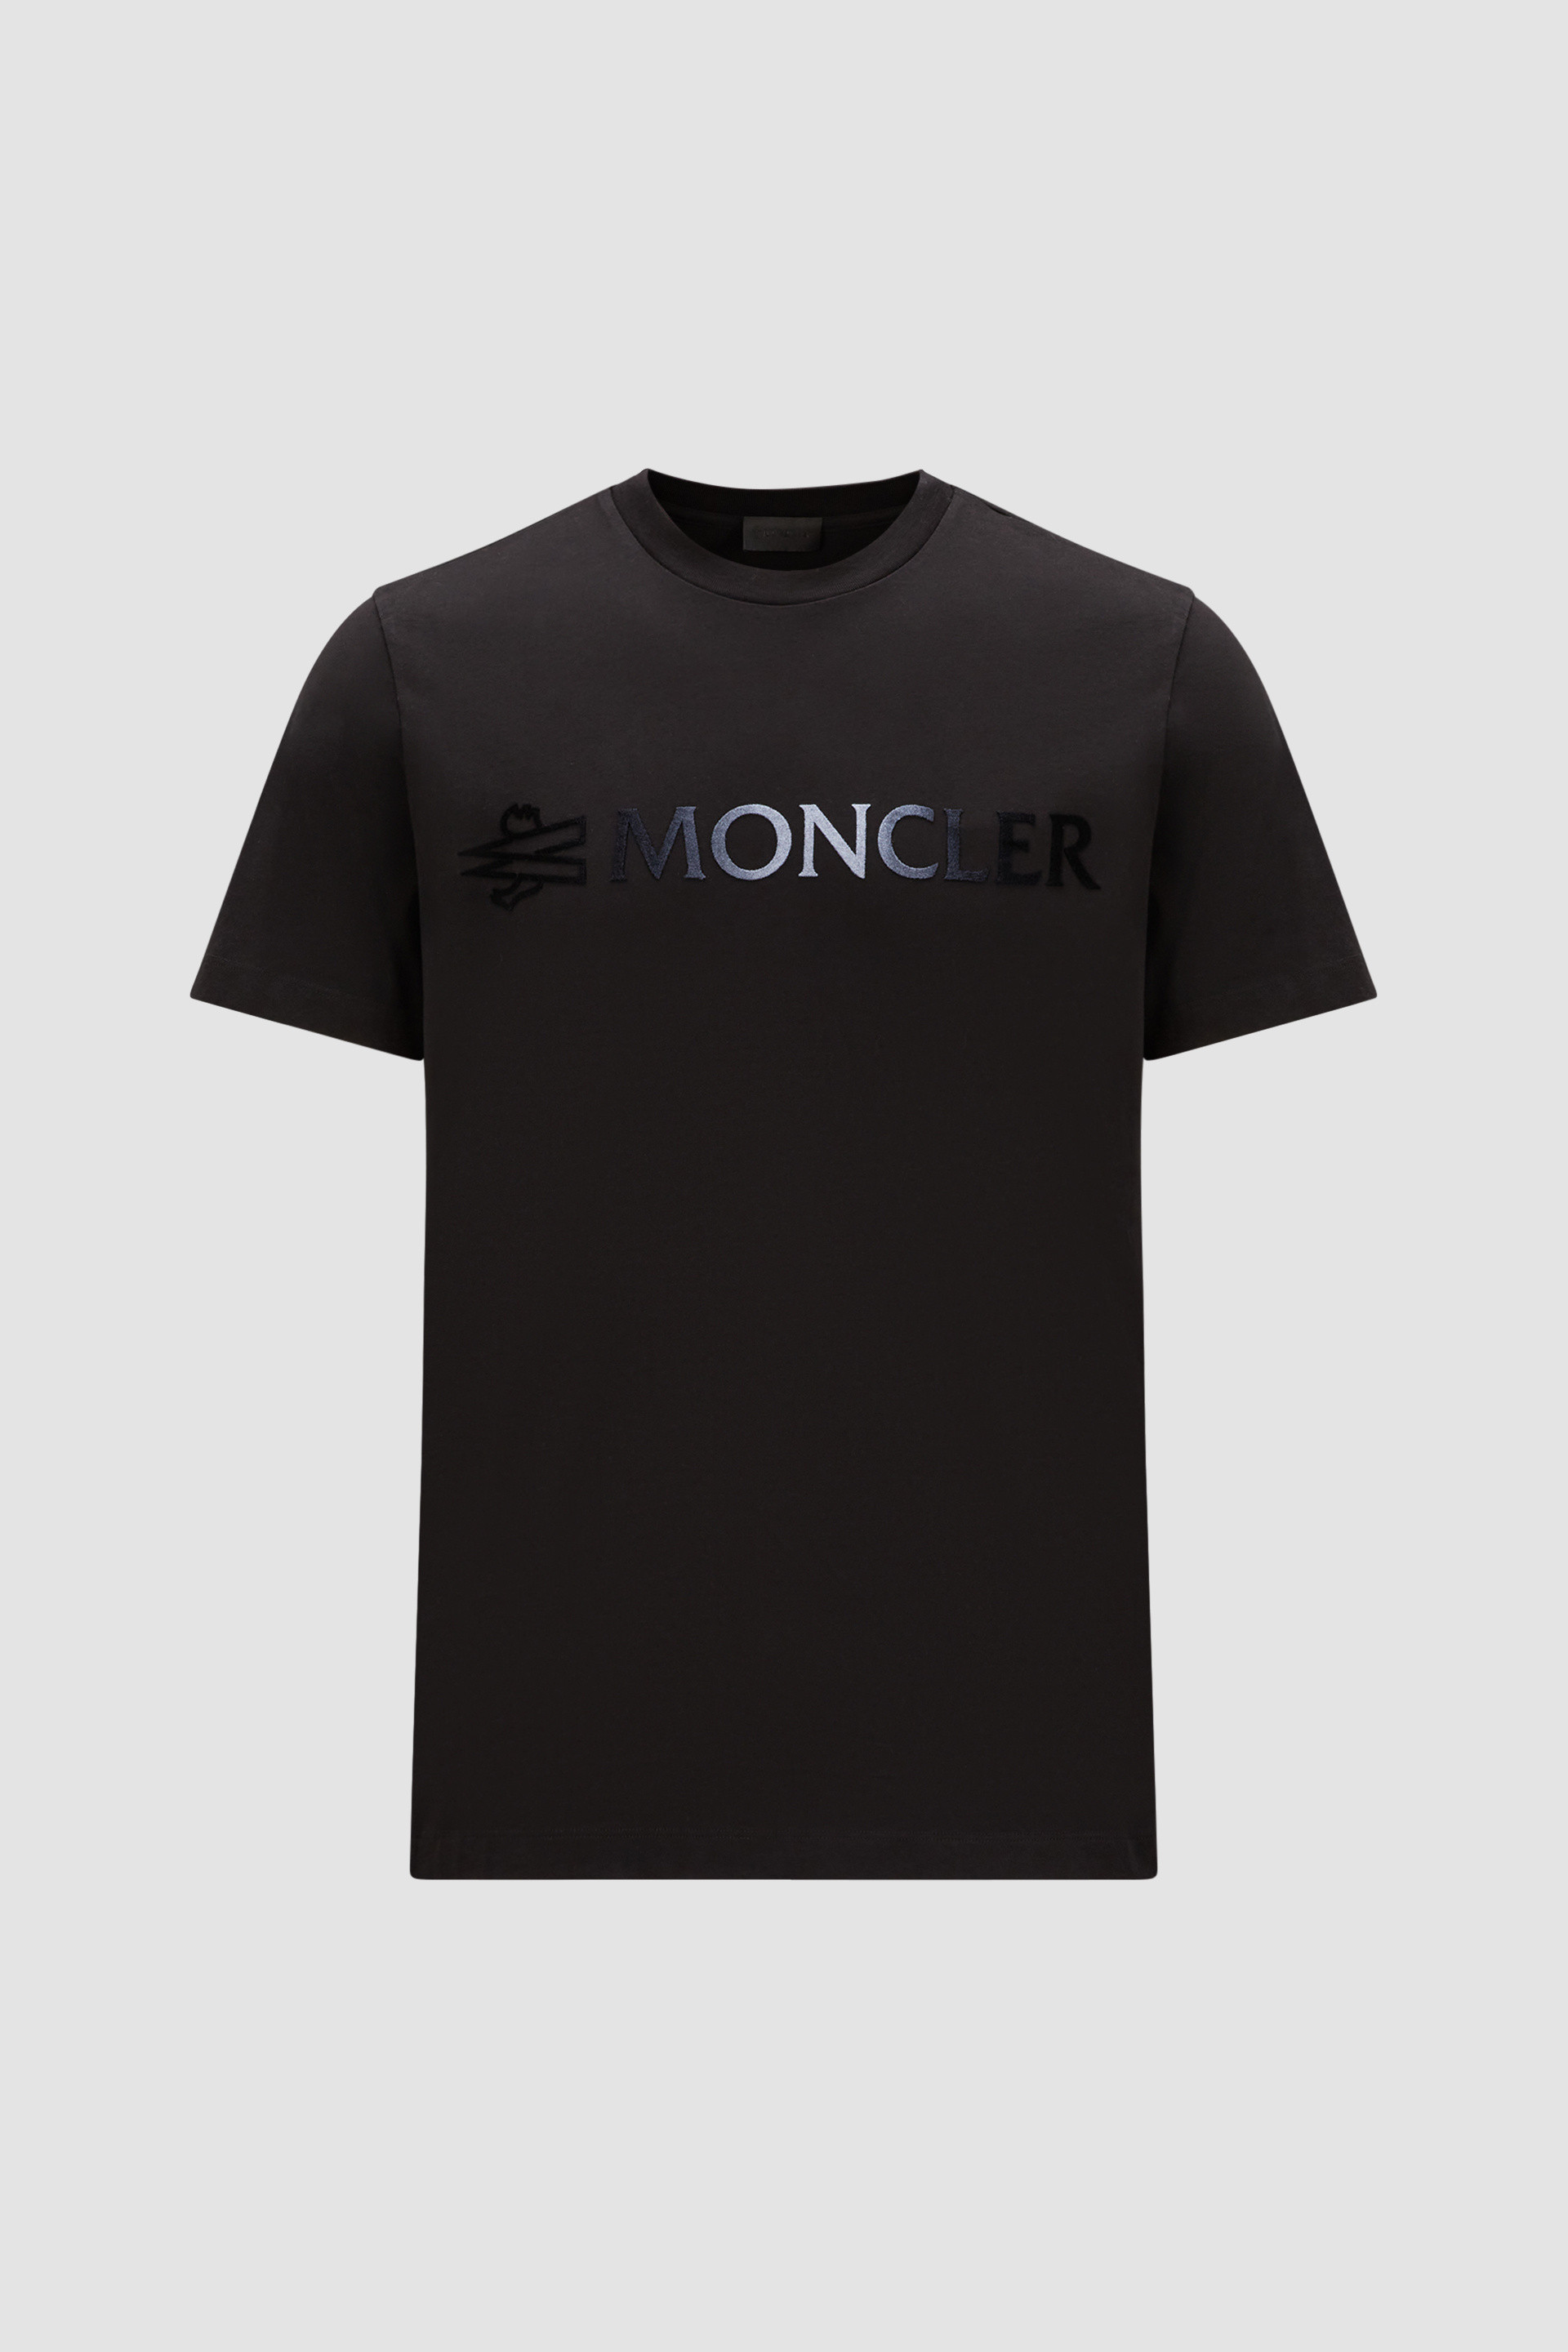 Moncler Tシャツ 2019-20AW 新作 ボックスロゴ 日本で完売アイテムTシャツ